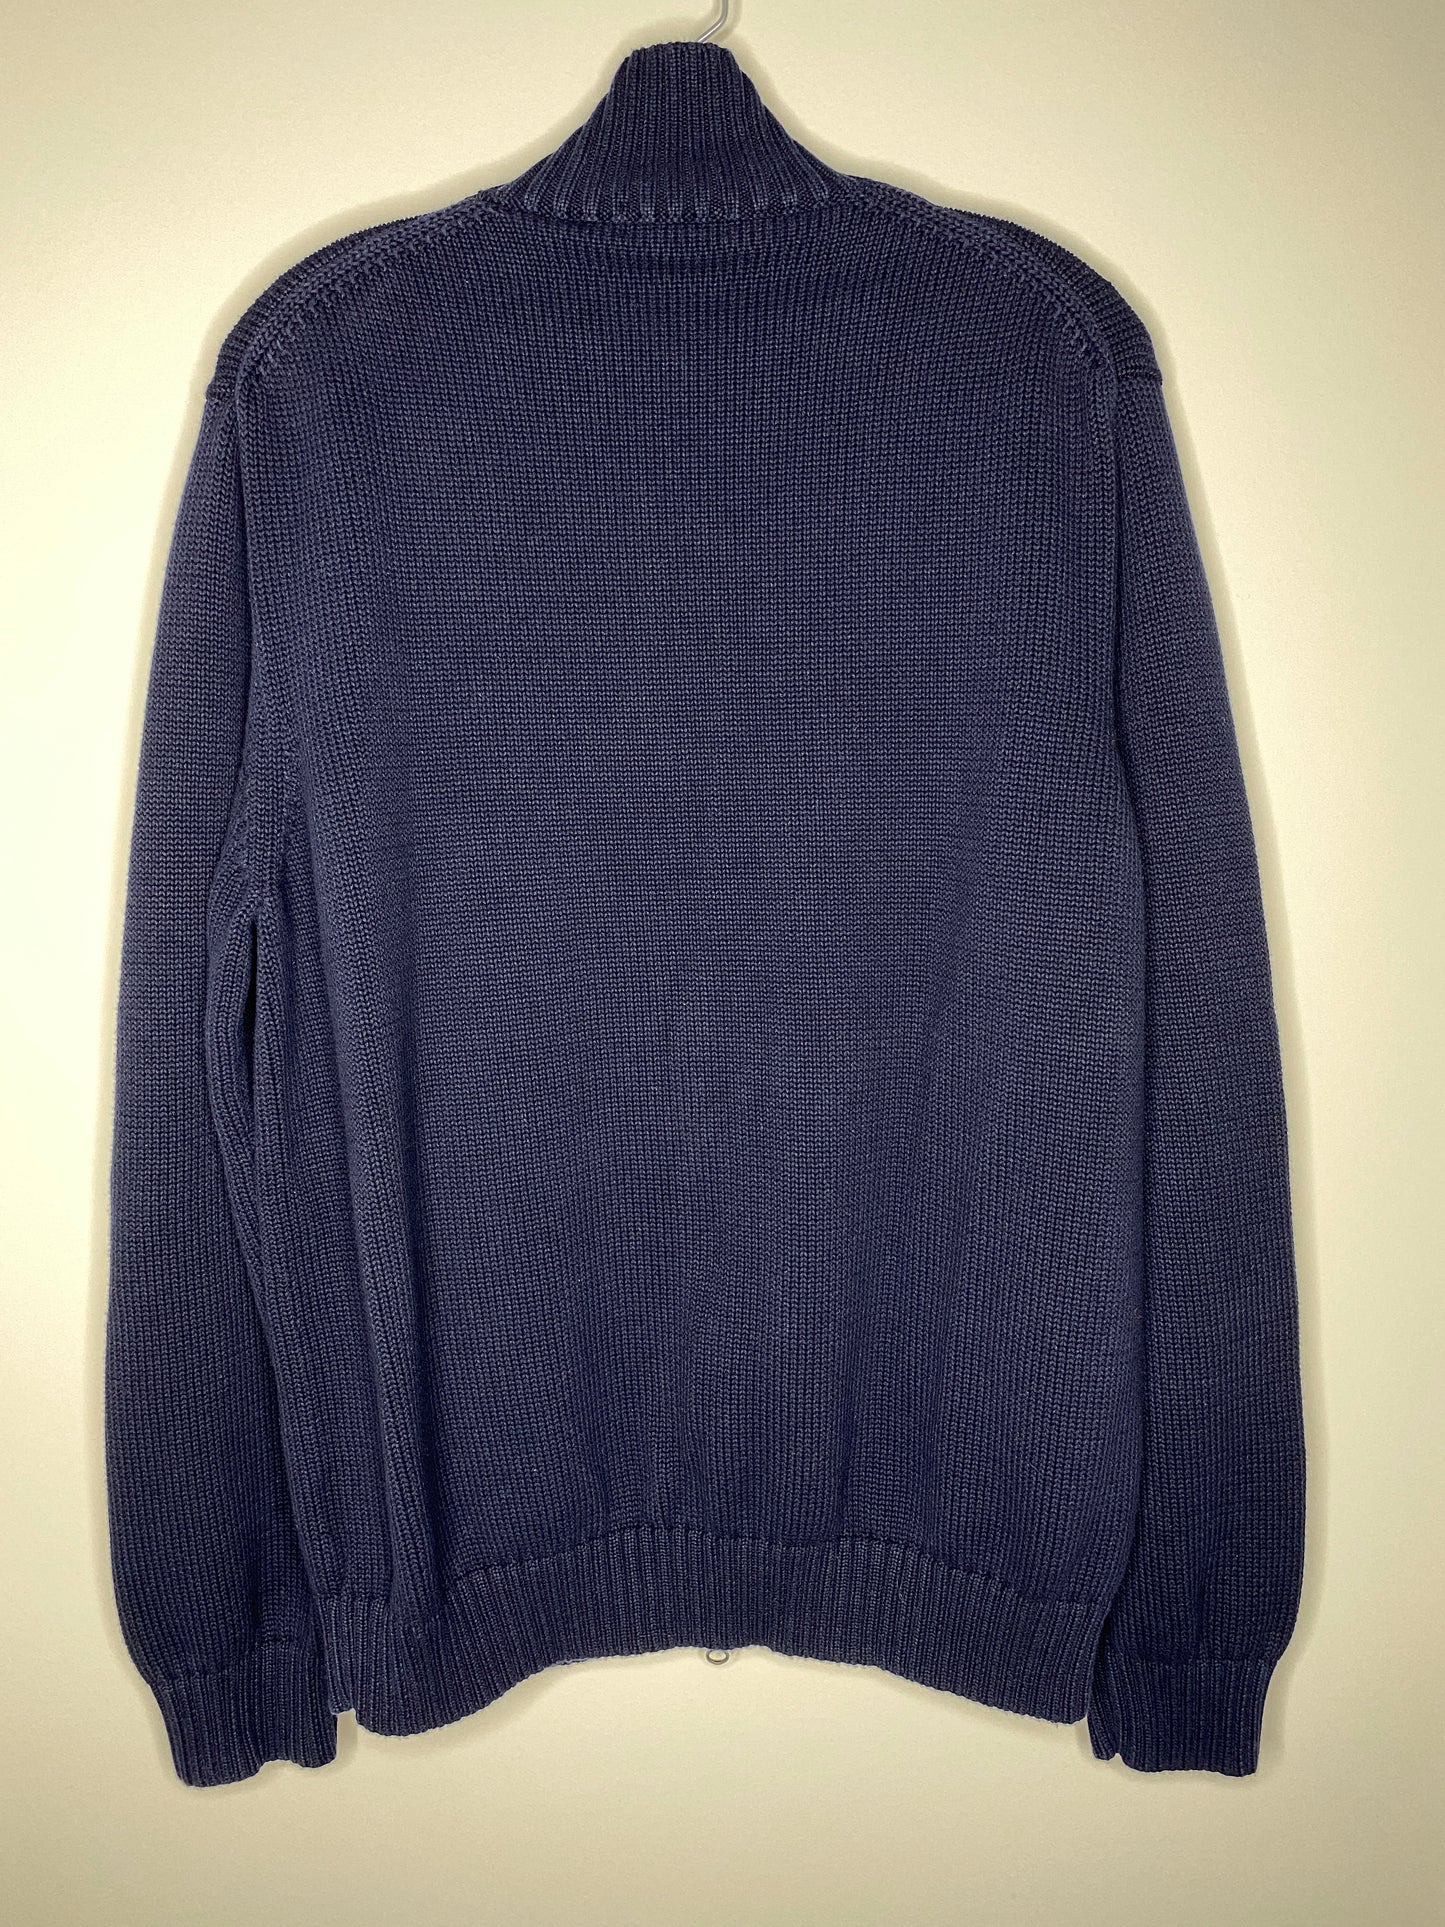 J.Crew Men's Size XL Navy Blue Full-Zip Sweater